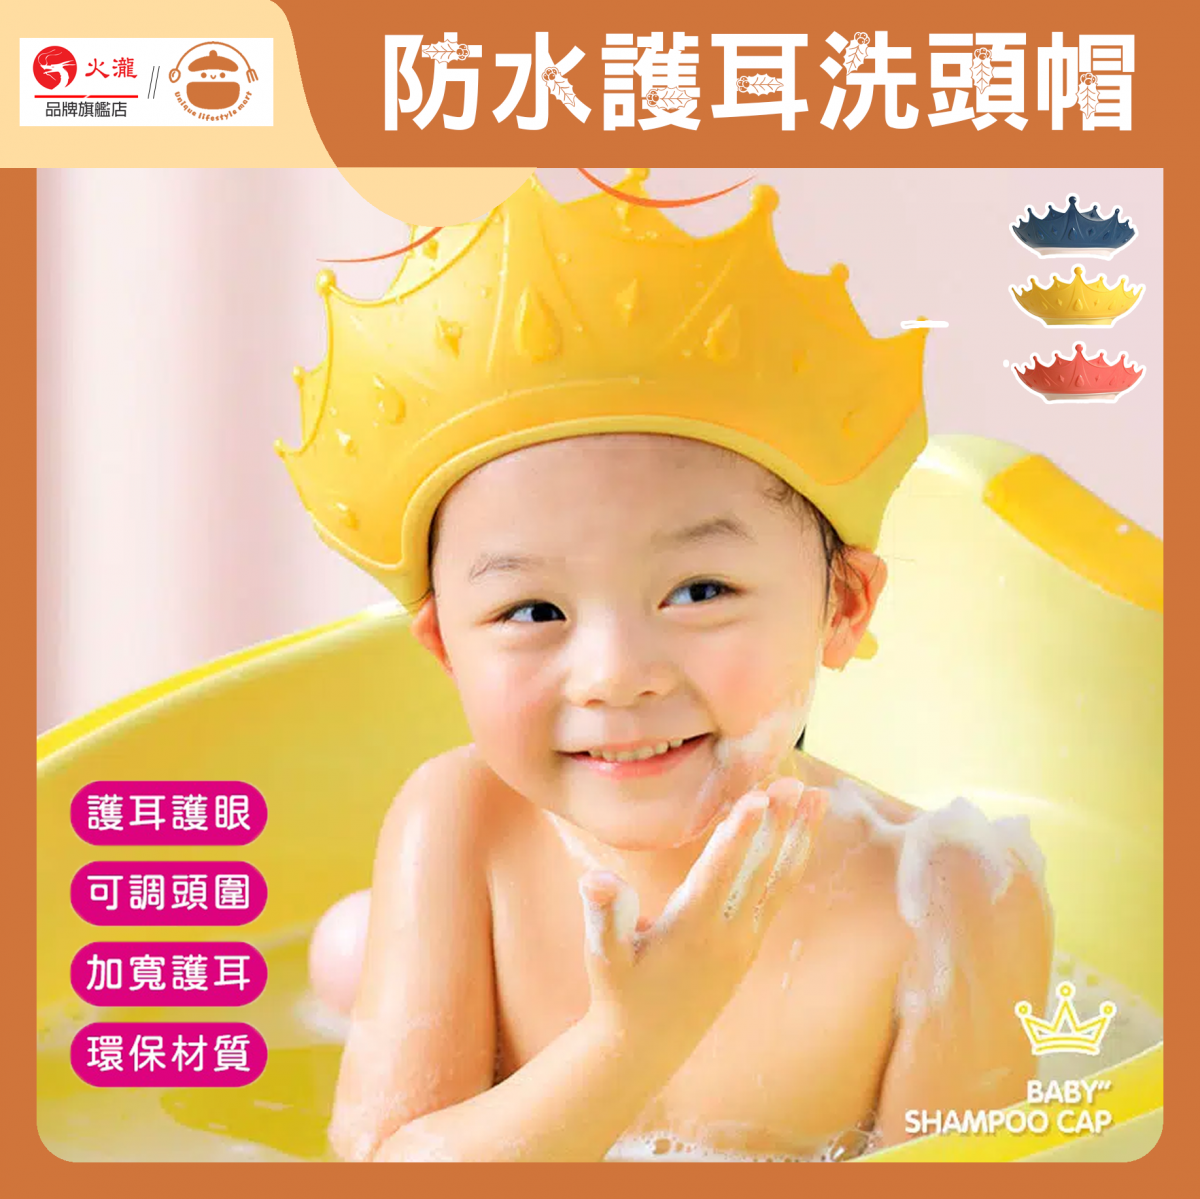 Children's Eye and Ear Protecting Shampoo Cap - Shampoo Cap|Shower Cap|Shampoo Artifact